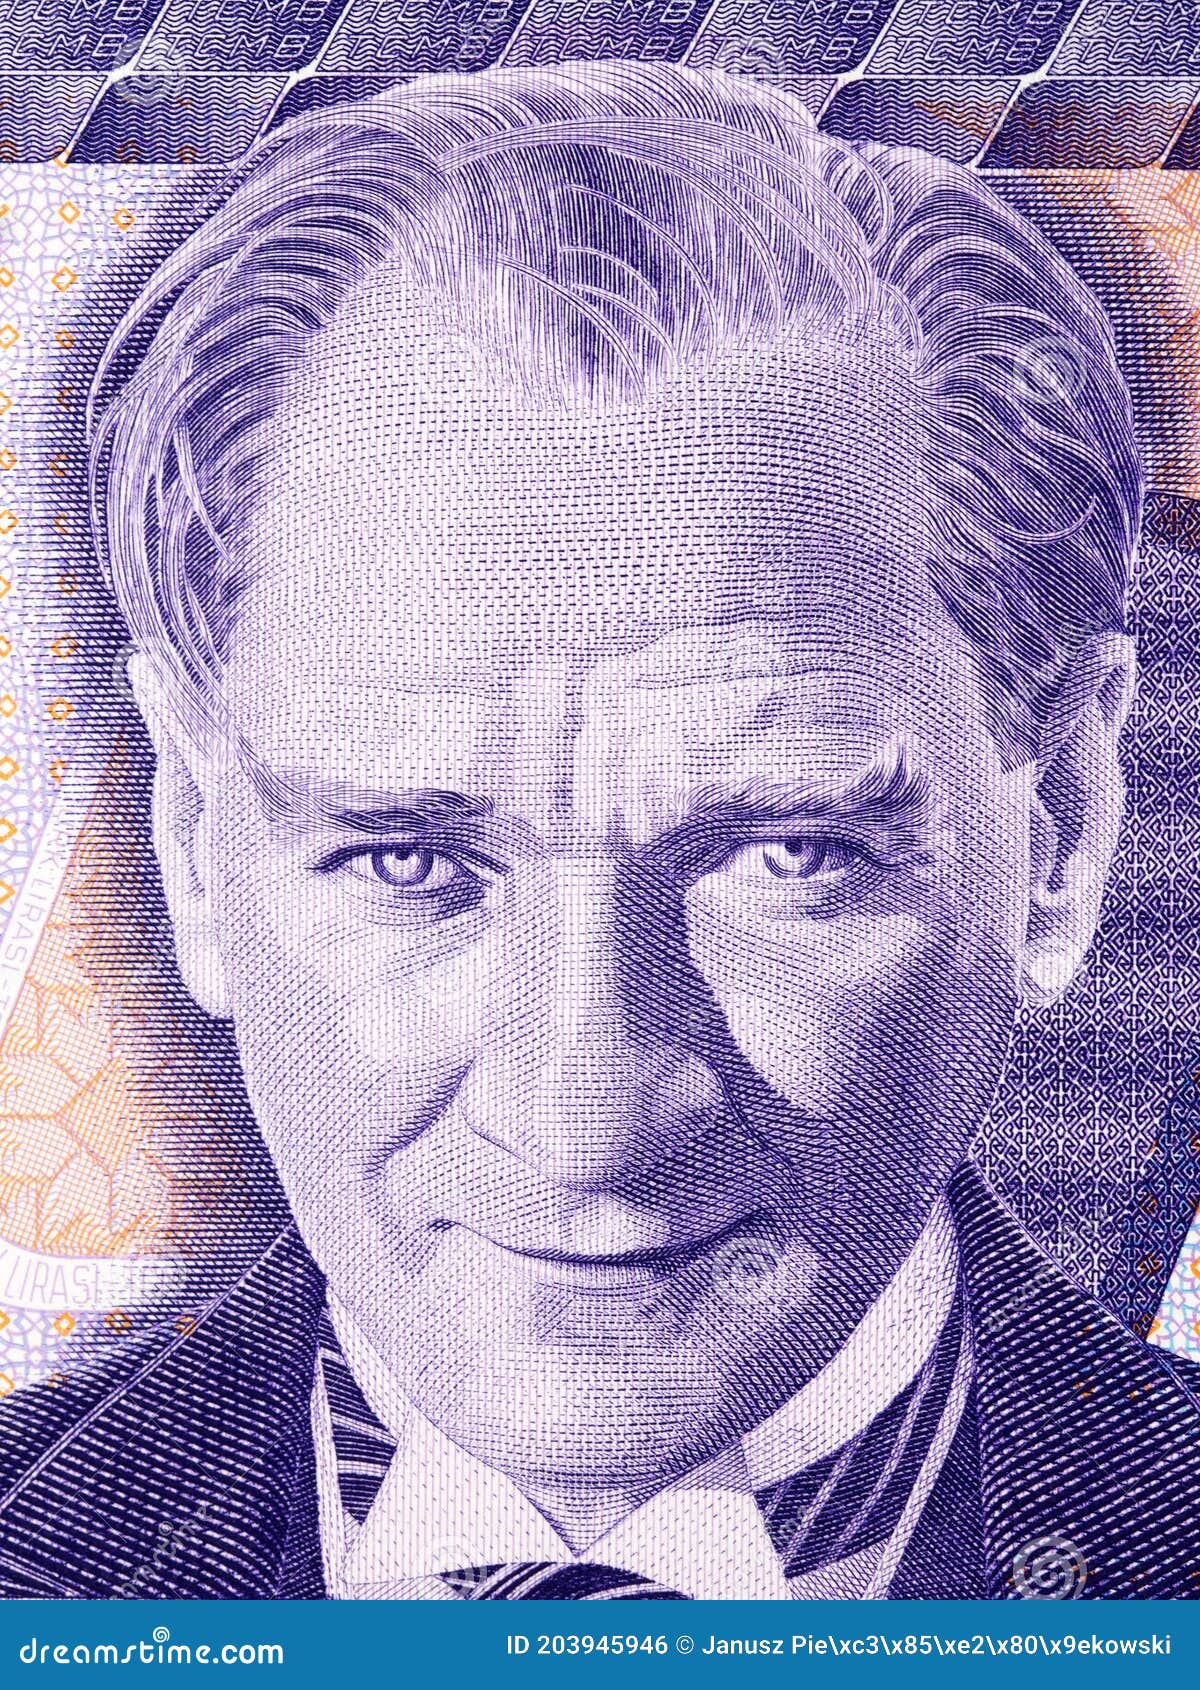 mustafa kemal ataturk a portrait from turkish money